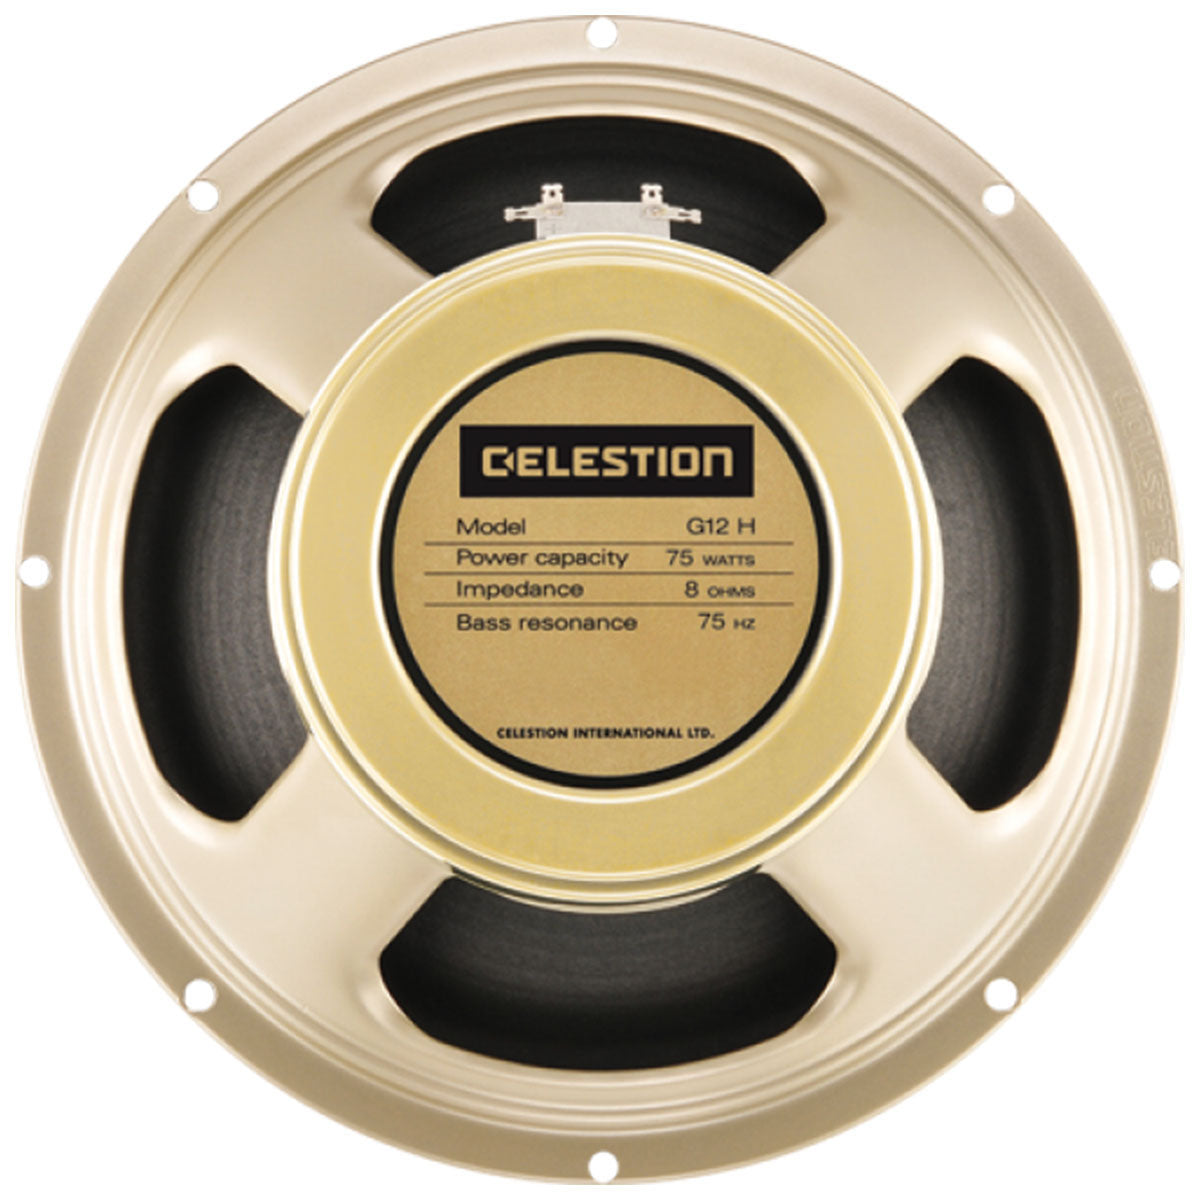 Celestion T5891 Classic Series G12H 75 Creamback Guitar Speaker 12 Inch 75W 16OHM